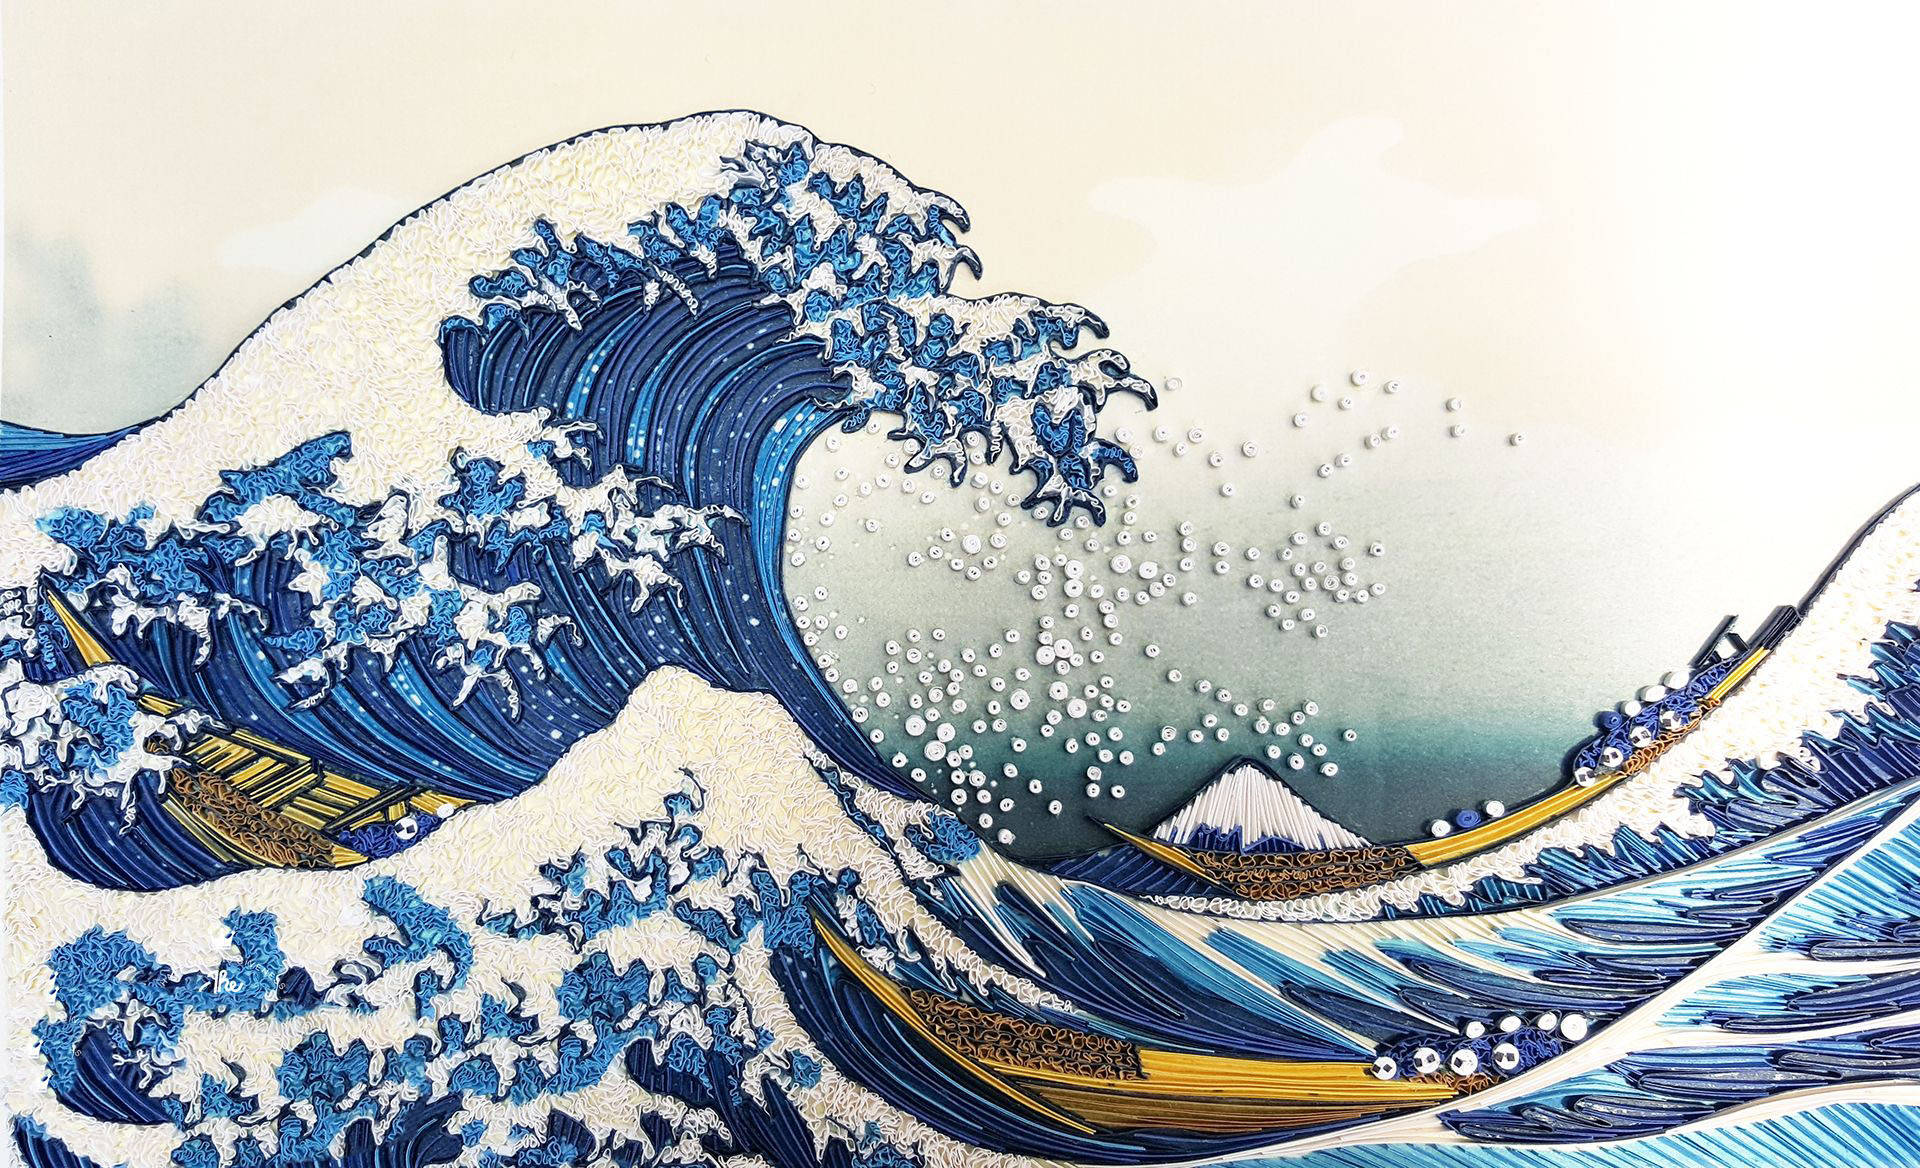 573823 1920x1080 japan the great wave off kanagawa waves minimalism  wallpaper JPG 104 kB  Rare Gallery HD Wallpapers